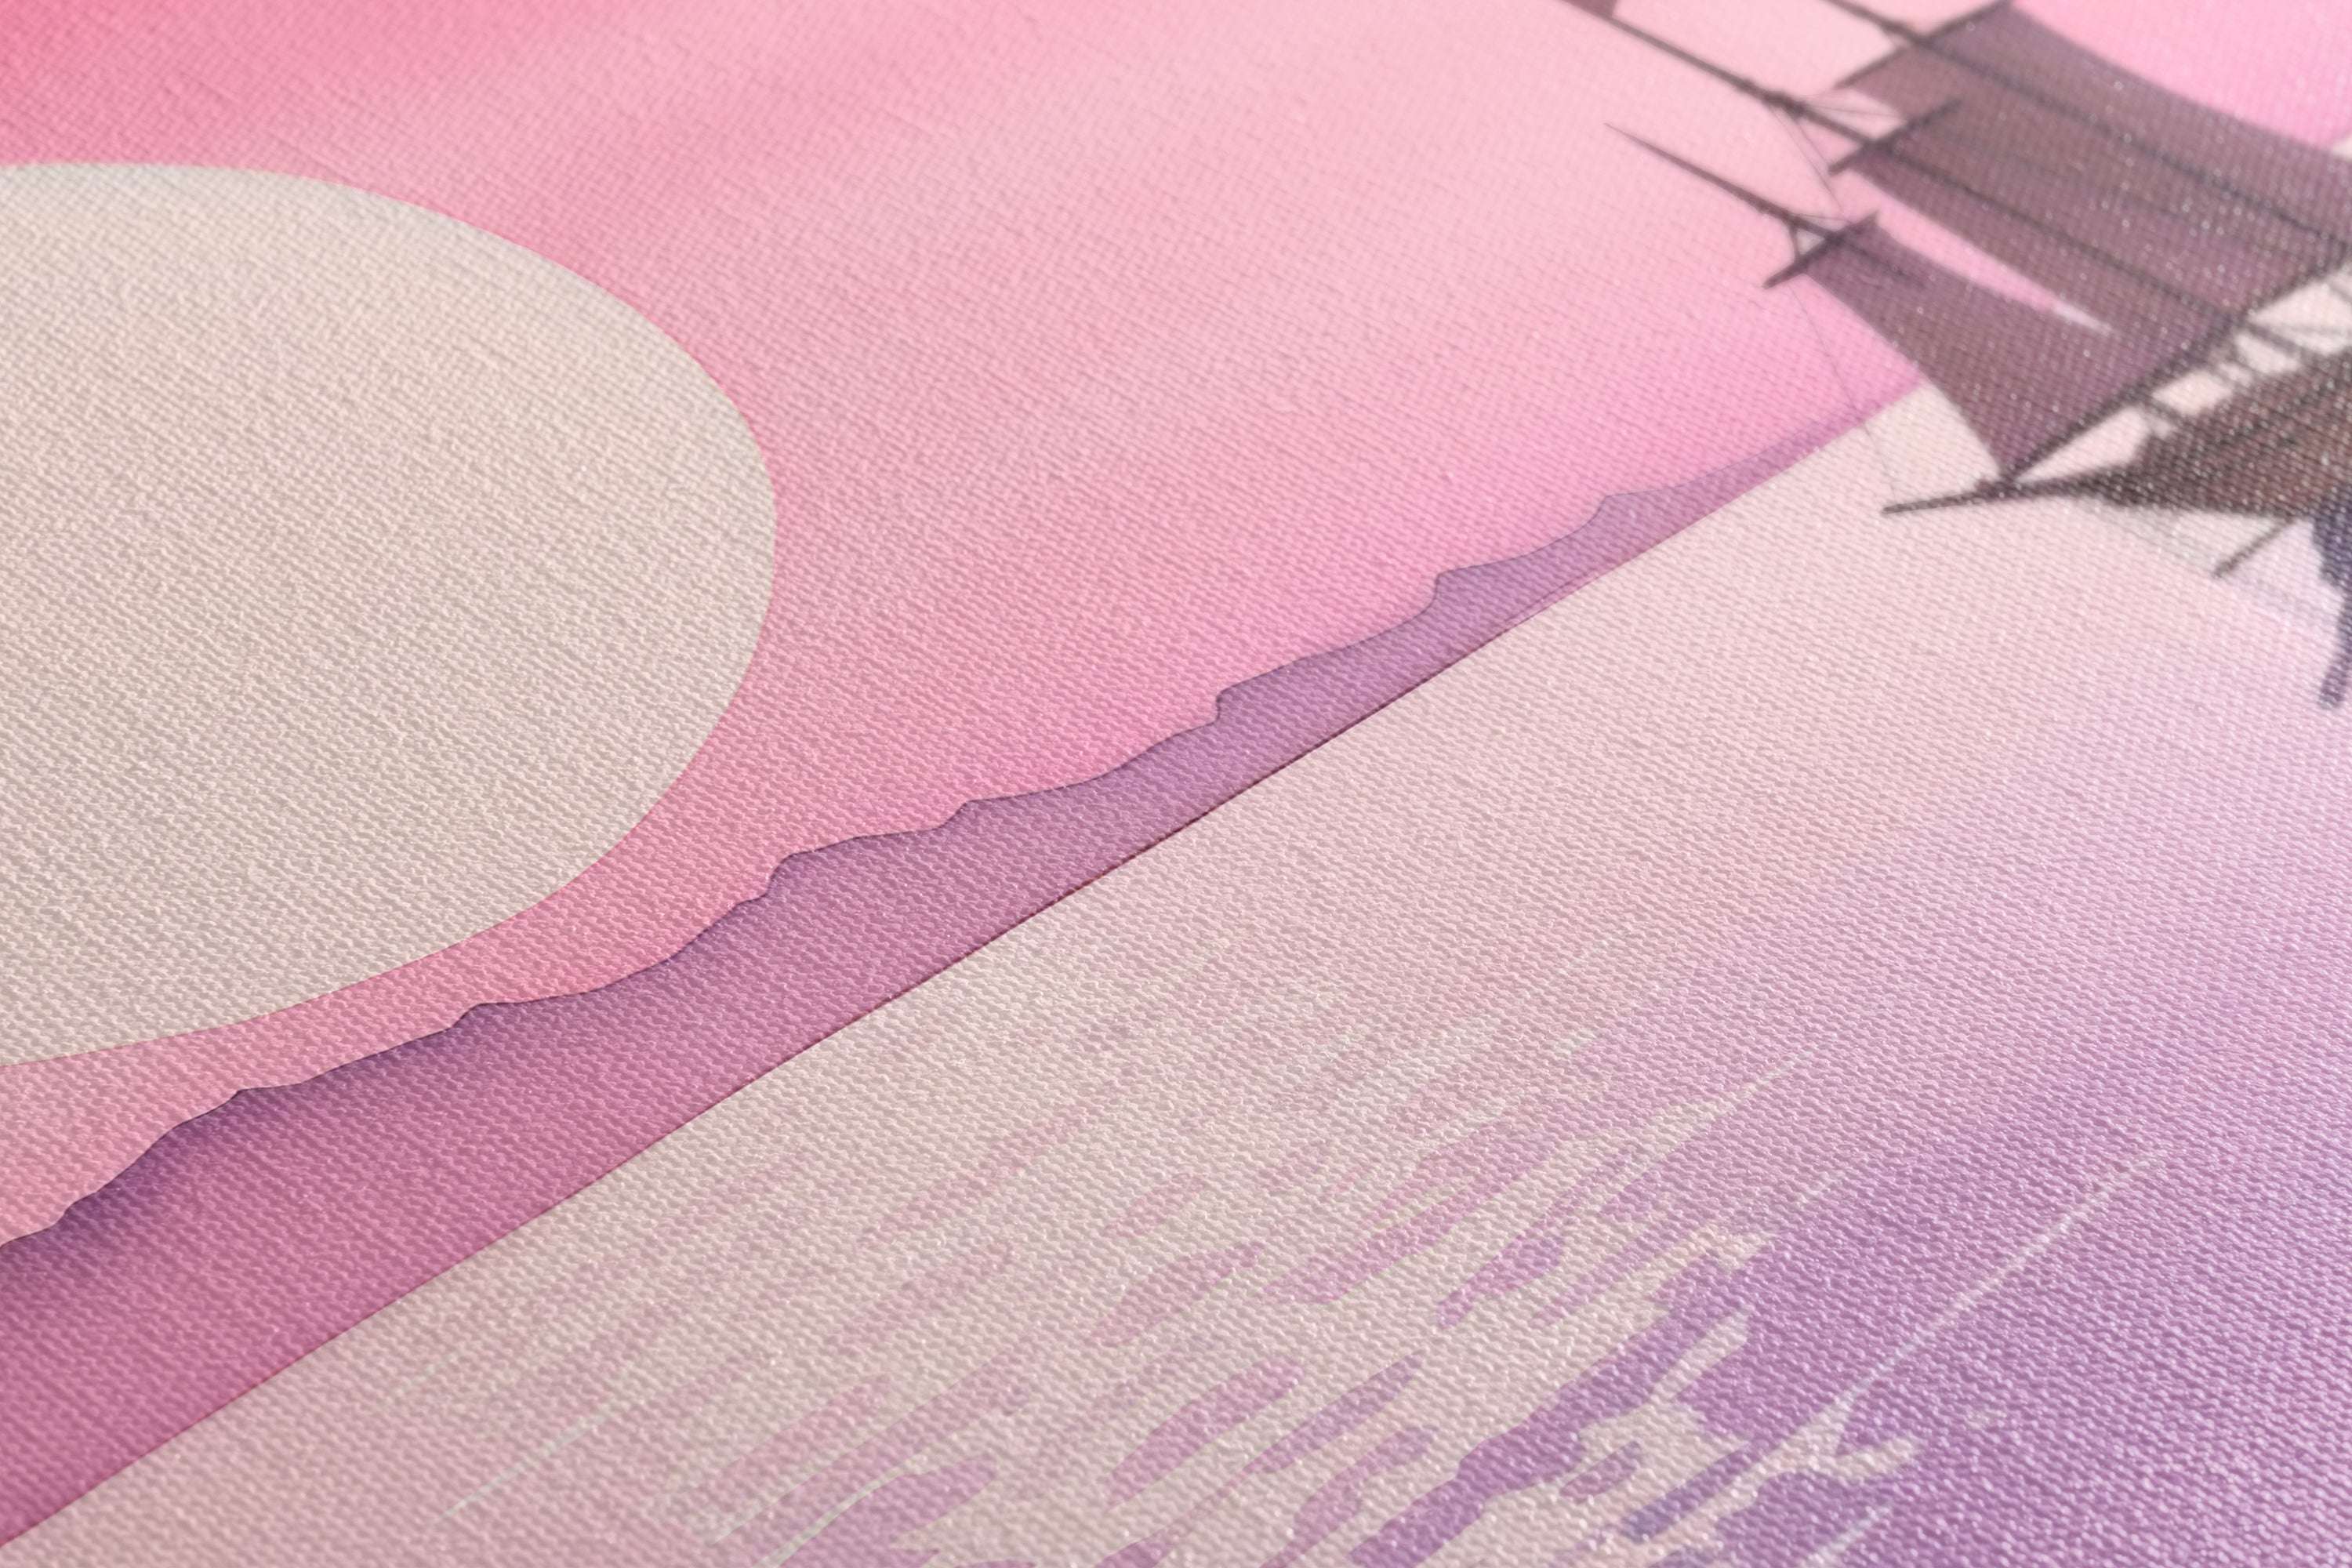 Romantic Pink Sunset with Sailboat - Canvas Print - Artoholica Ready to Hang Canvas Print